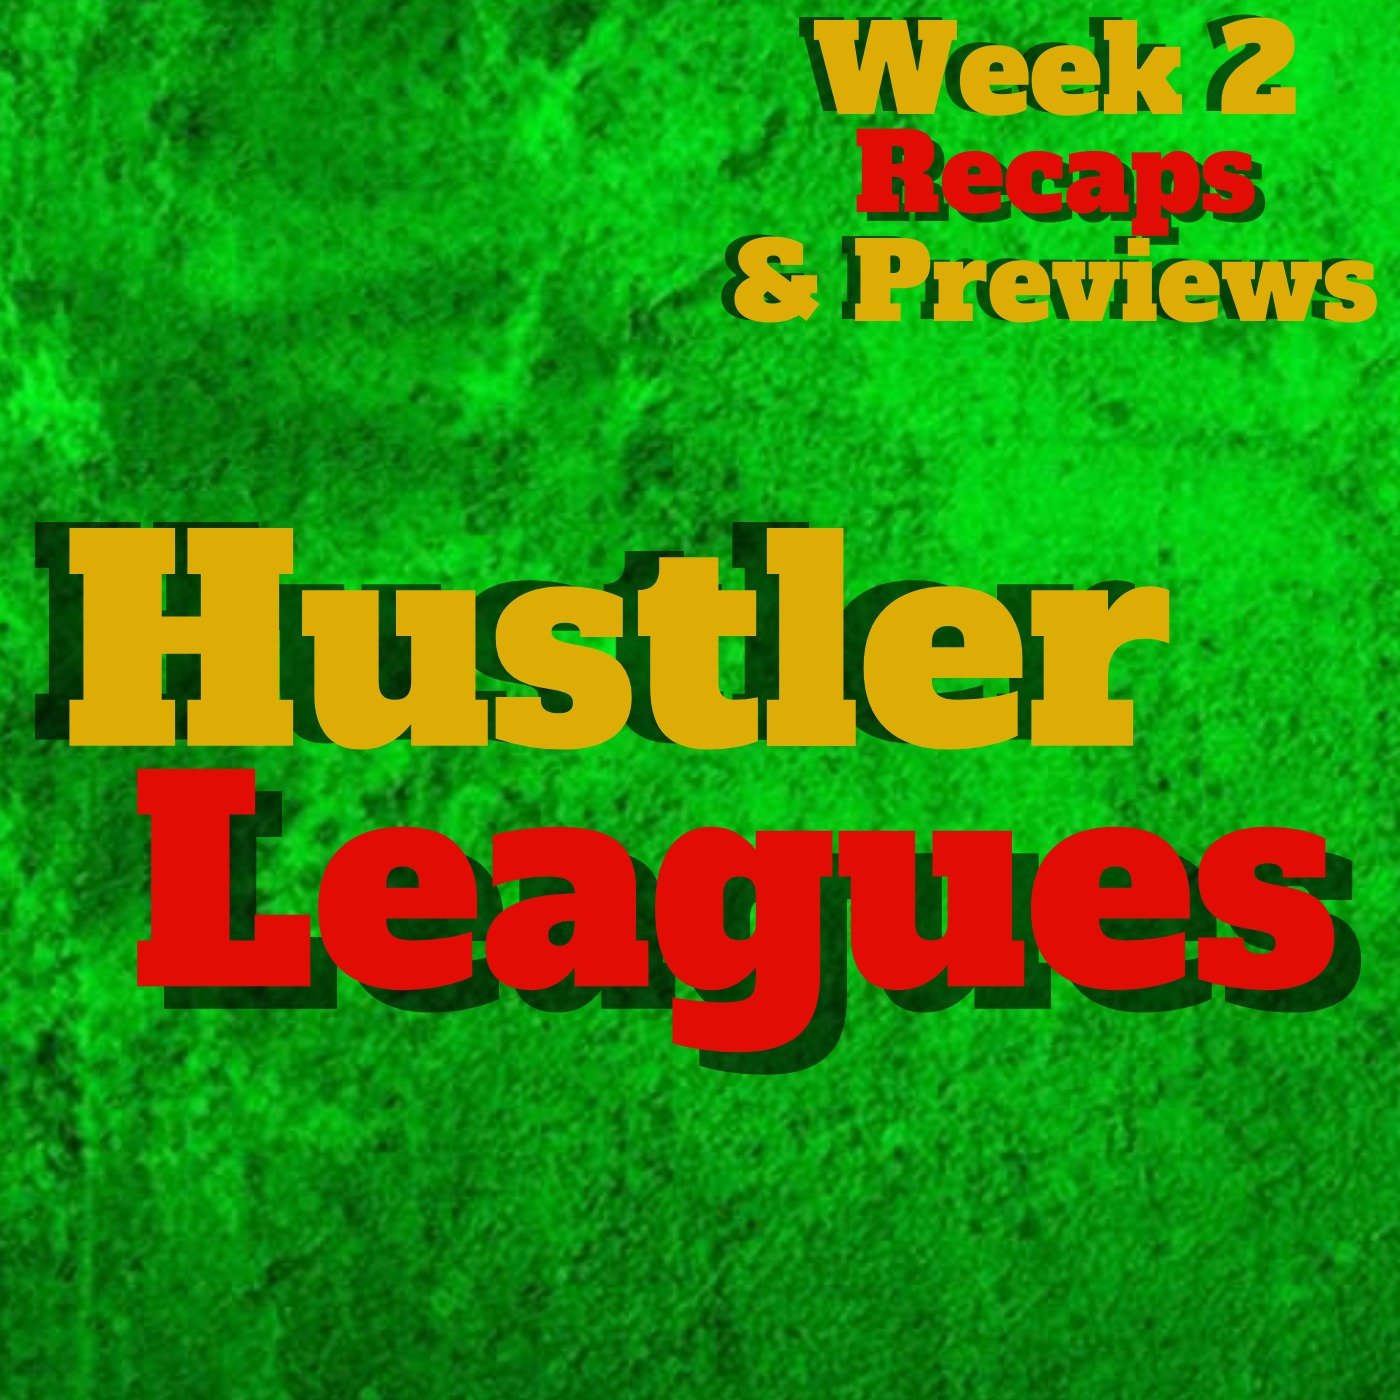 Hustler Fantasy Football Leagues Week 2 Recaps & Previews